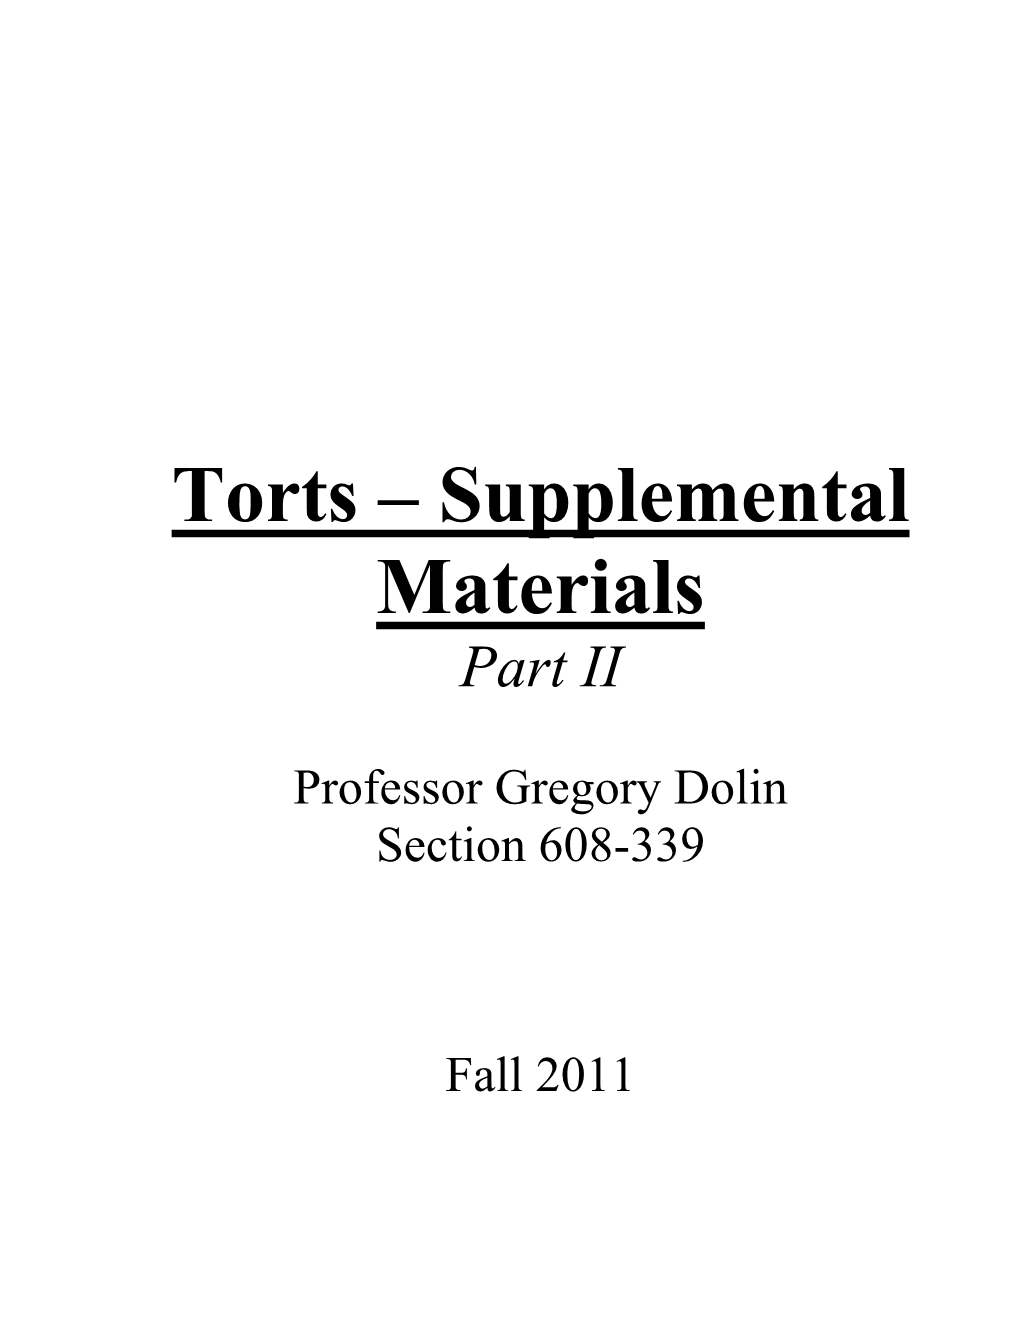 Torts – Supplemental Materials Part II